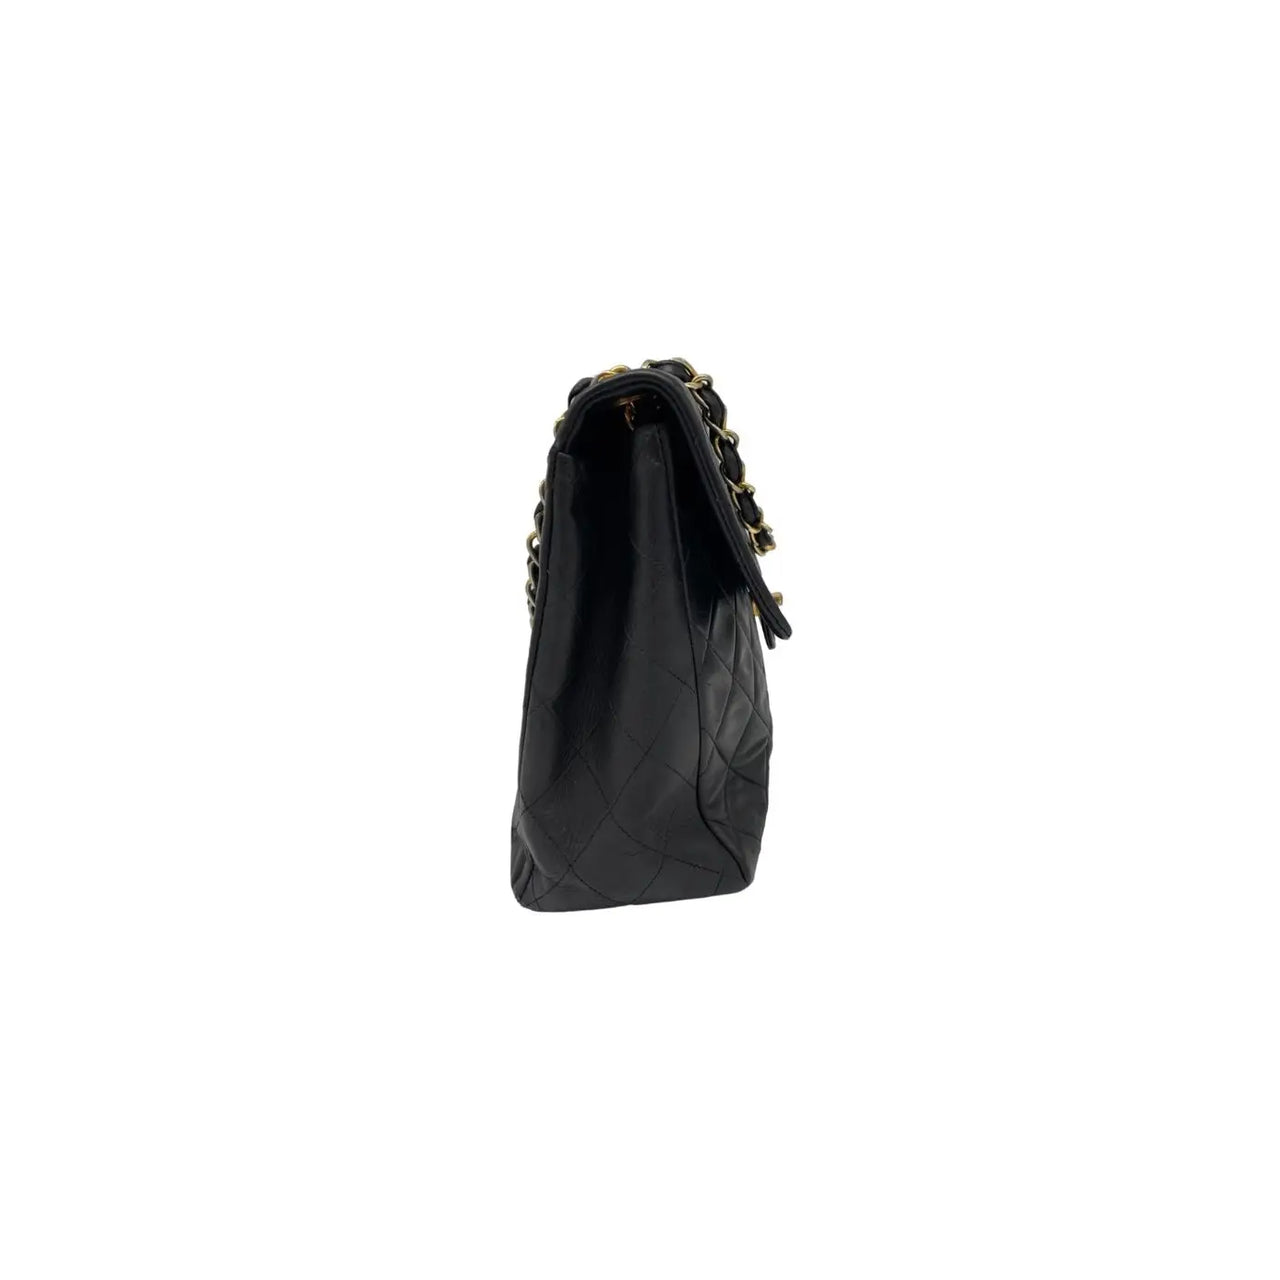 Chanel Vintage Black Lambskin Big CC Small Classic Flap Bag 24k